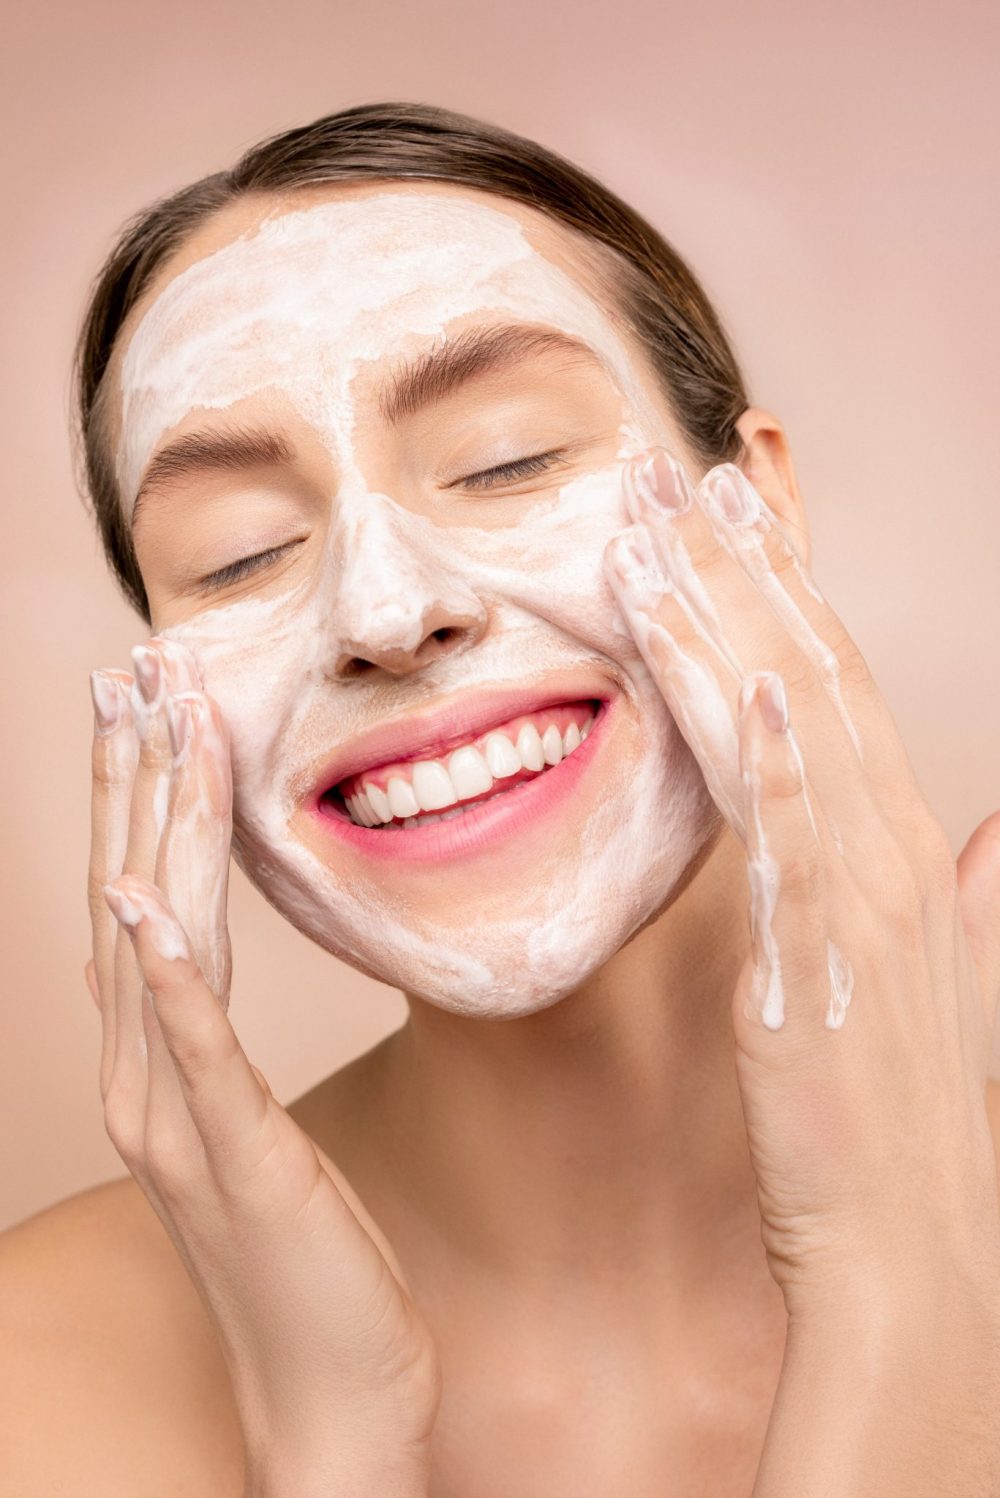 5 Ways To Keep Your Skin Happy & Healthy